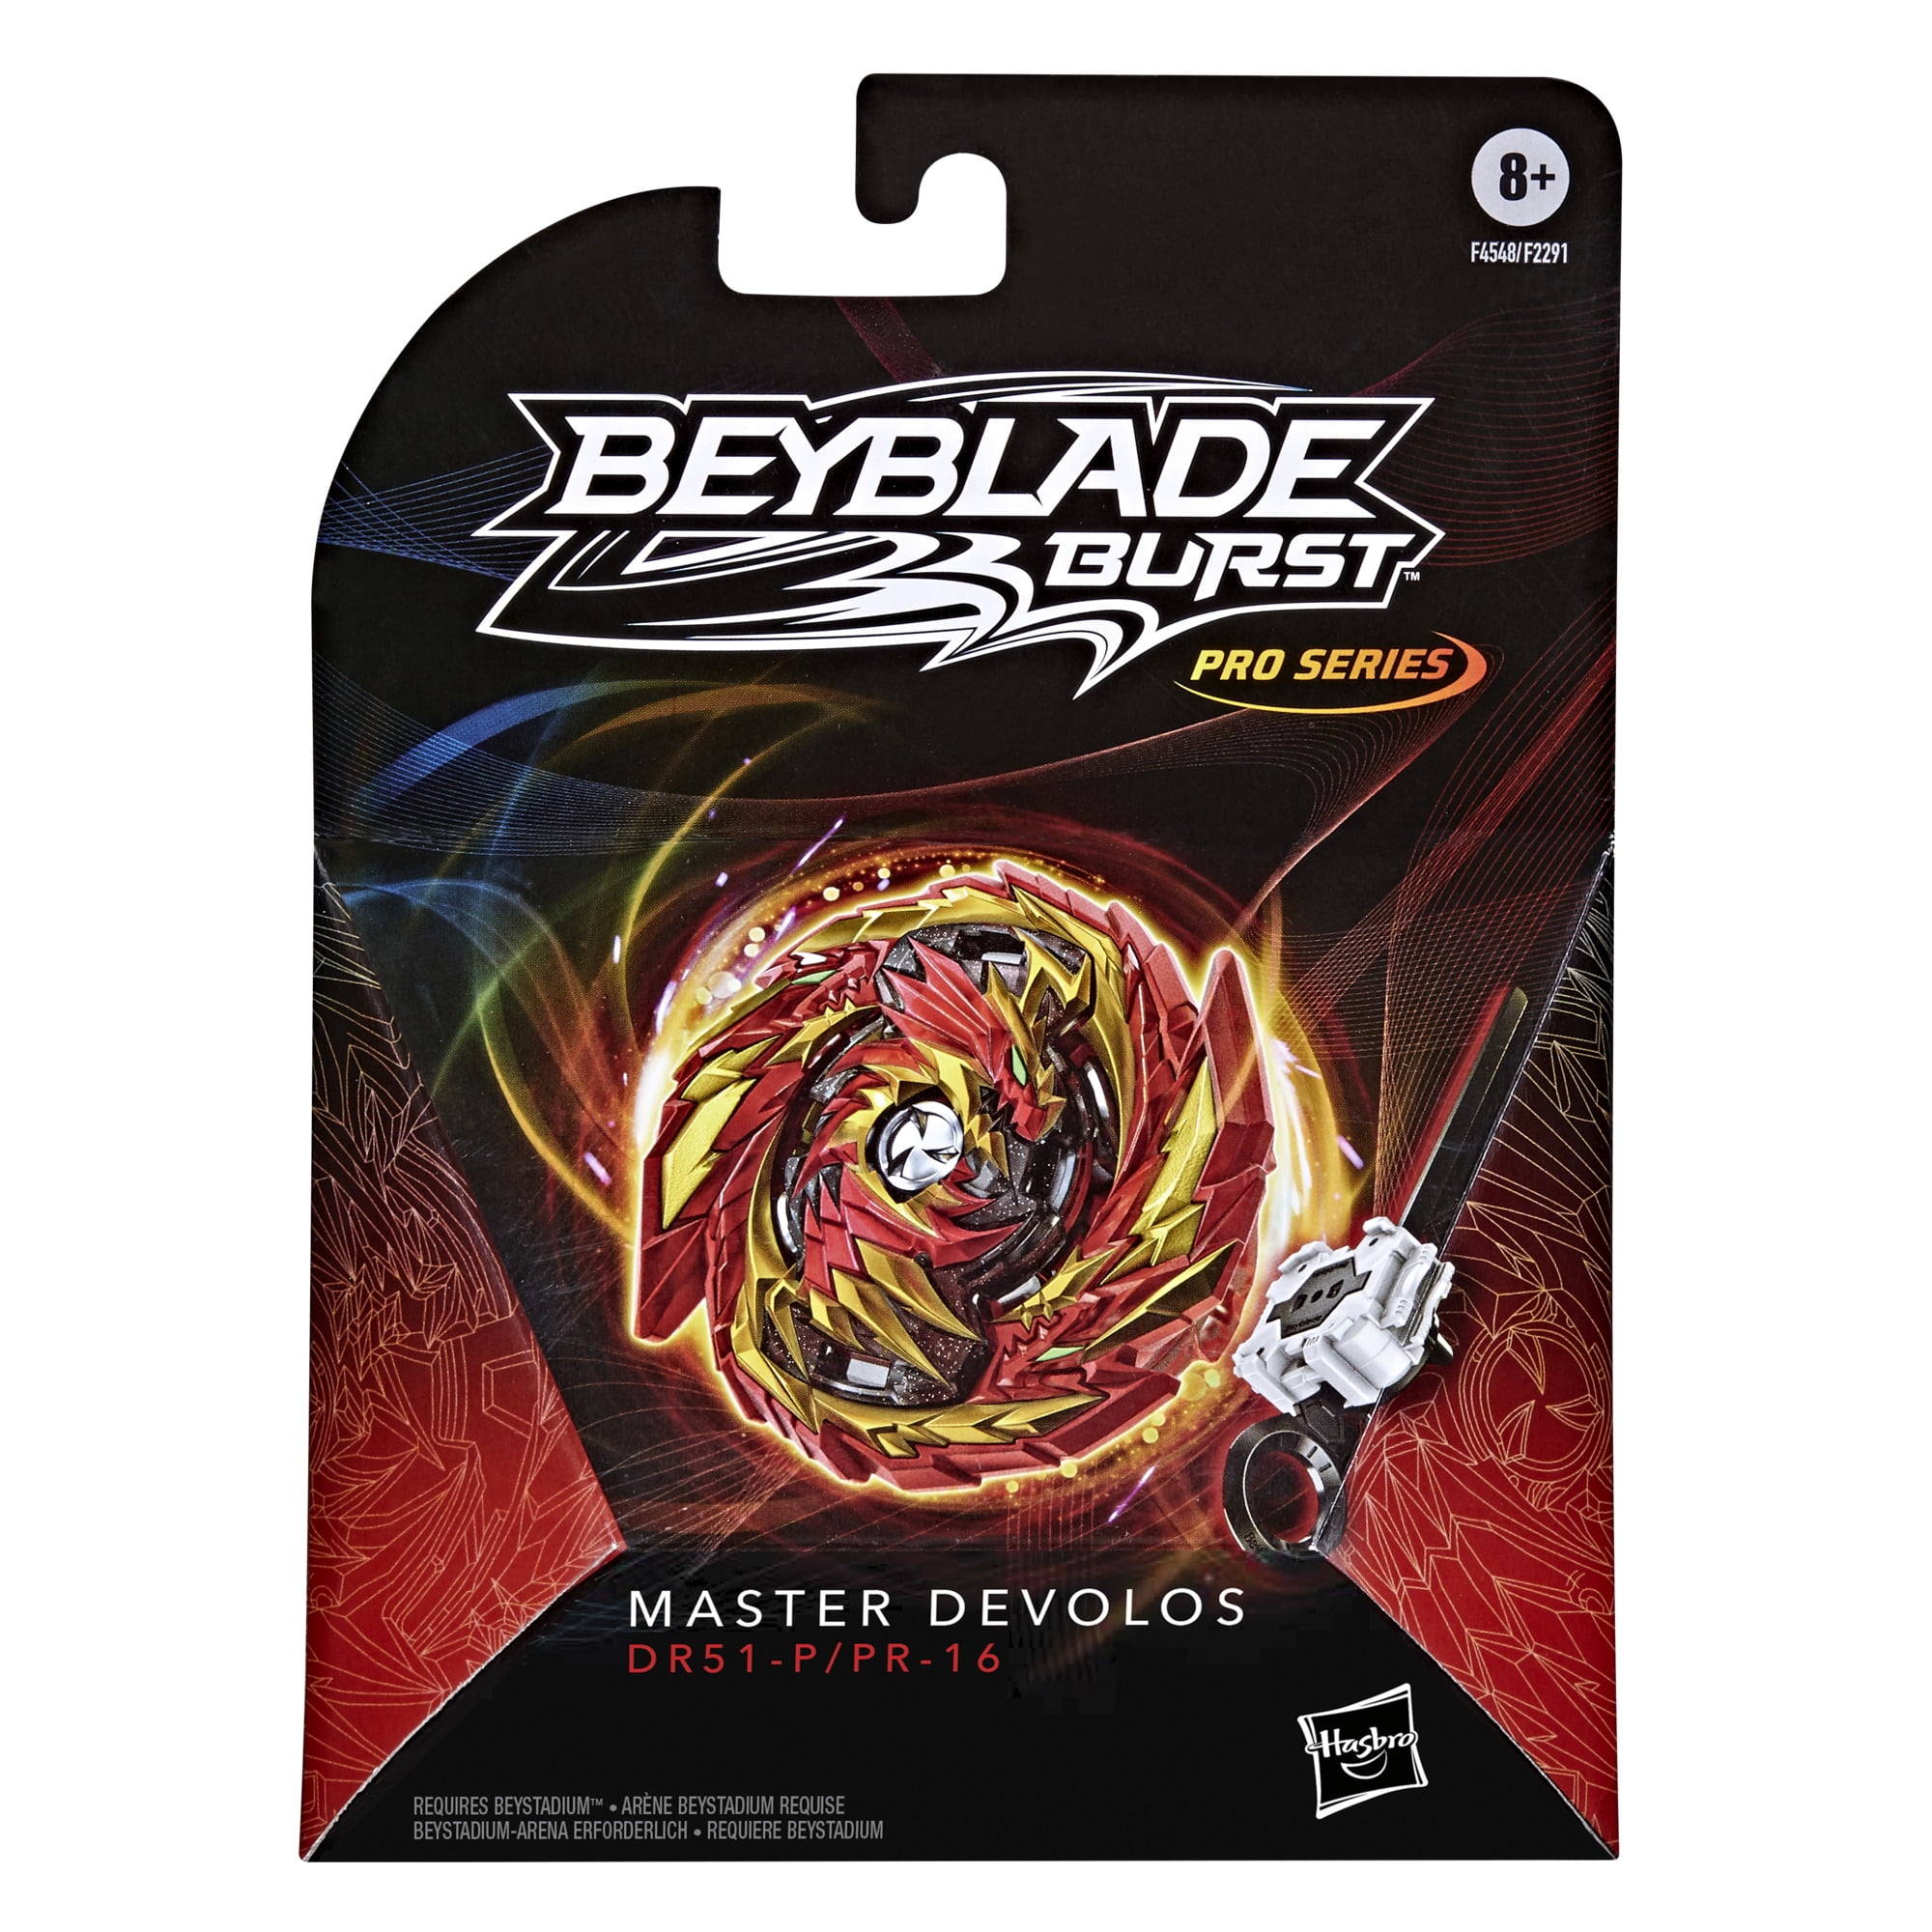 Beyblade Burst Pro Series Master Devolos Spinning Top Pack, Includes Launcher - Walmart.com